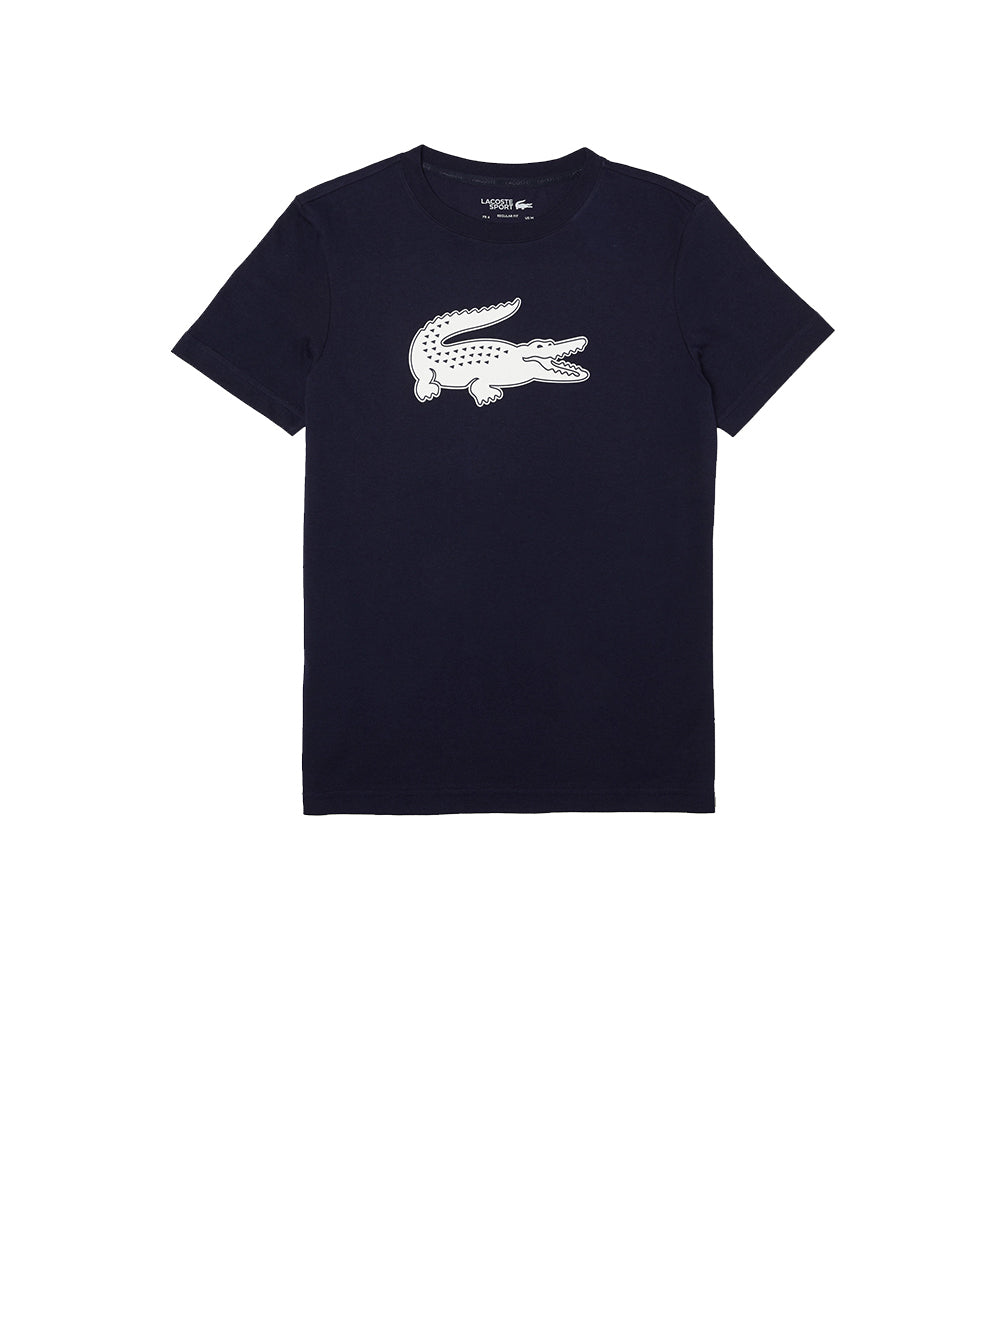 LACOSTE T-shirt Uomo Blu Navy con logo brand frontale BLU NAVY